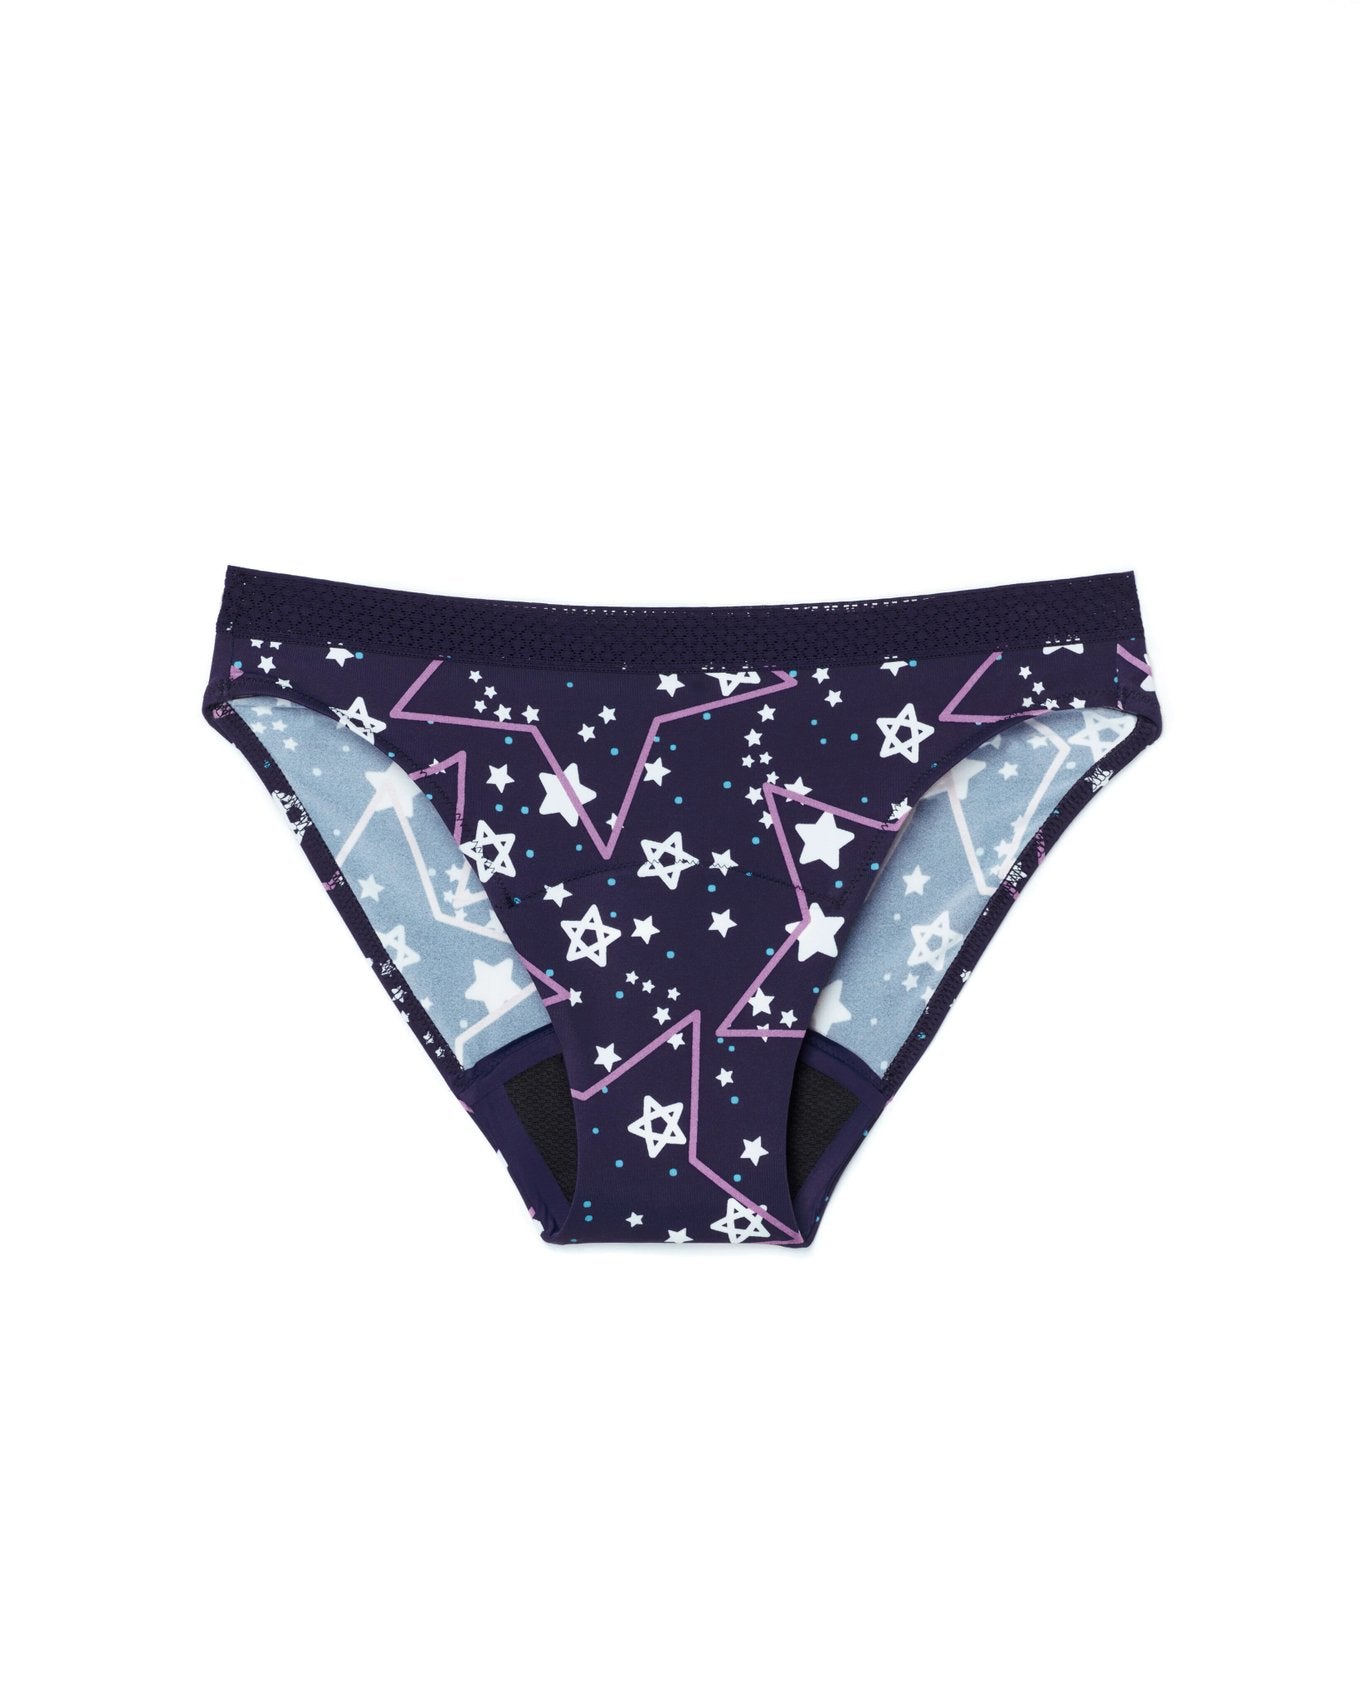 Joyja Katelin period-proof panty in color Seeing Stars C01 and shape bikini